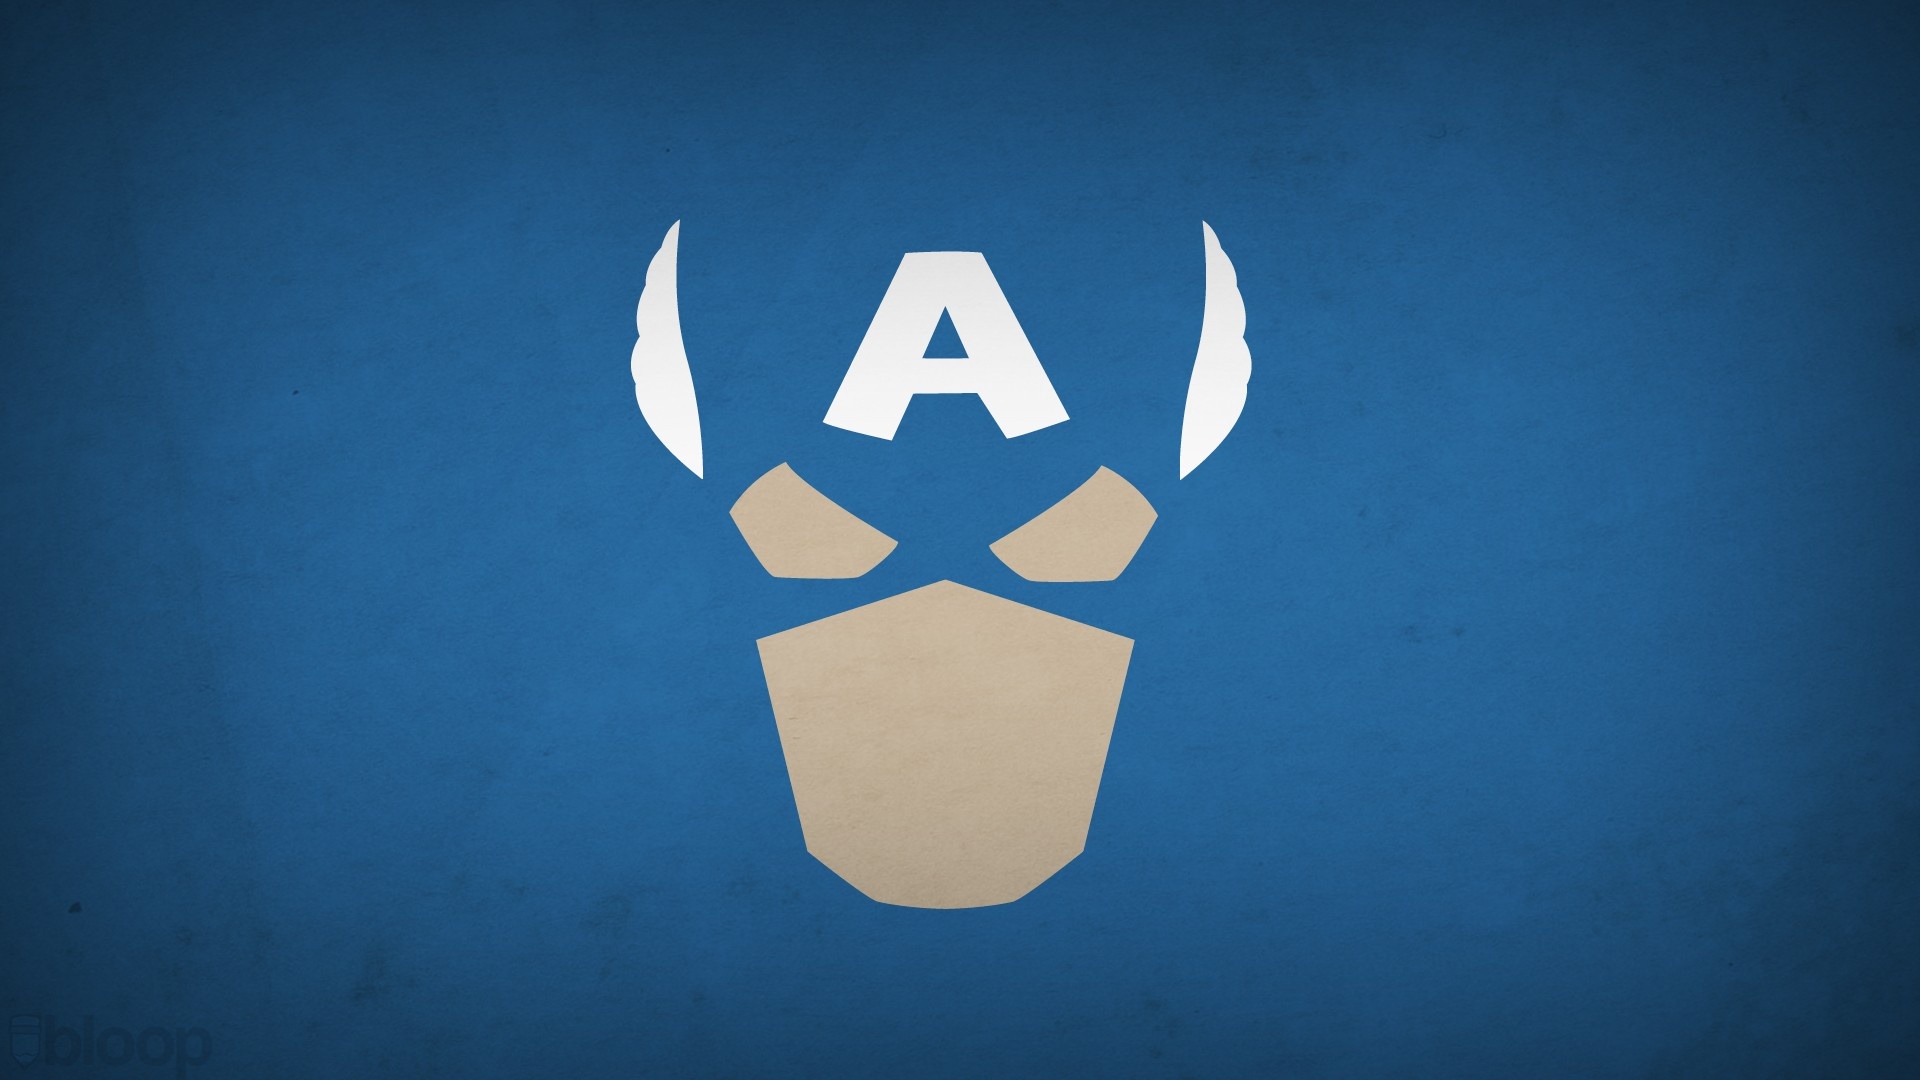 Desktop Wallpaper Captain America, Marvel Comics Minimal, Hd Image, Picture, Background, Lcqrby 1920x1080